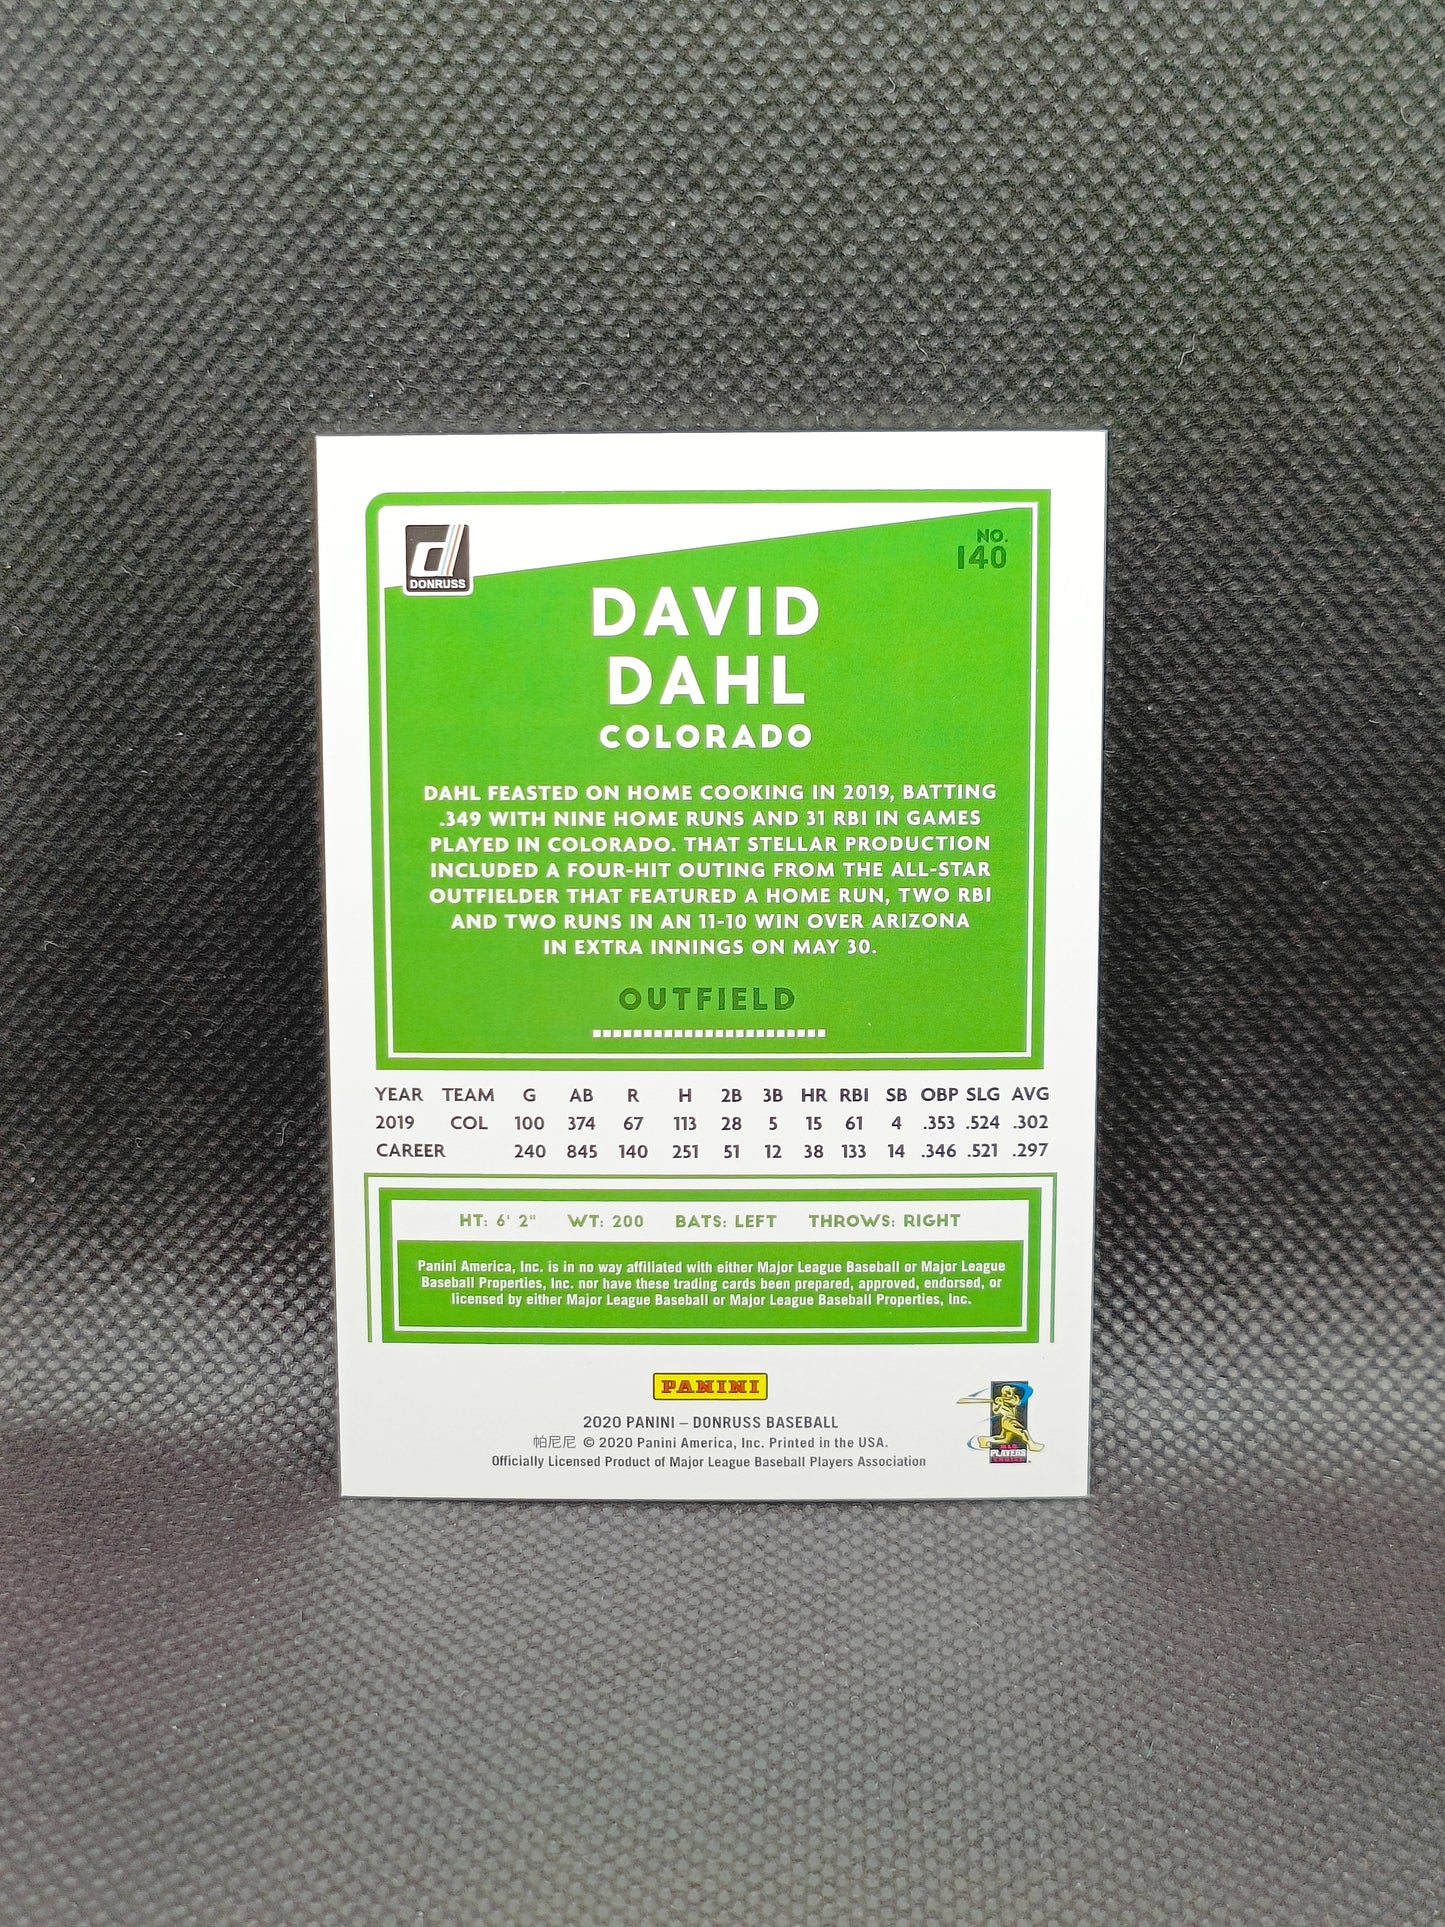 David Dahl - 2020 Panini Donruss Foil /500 - Colorado Rockies